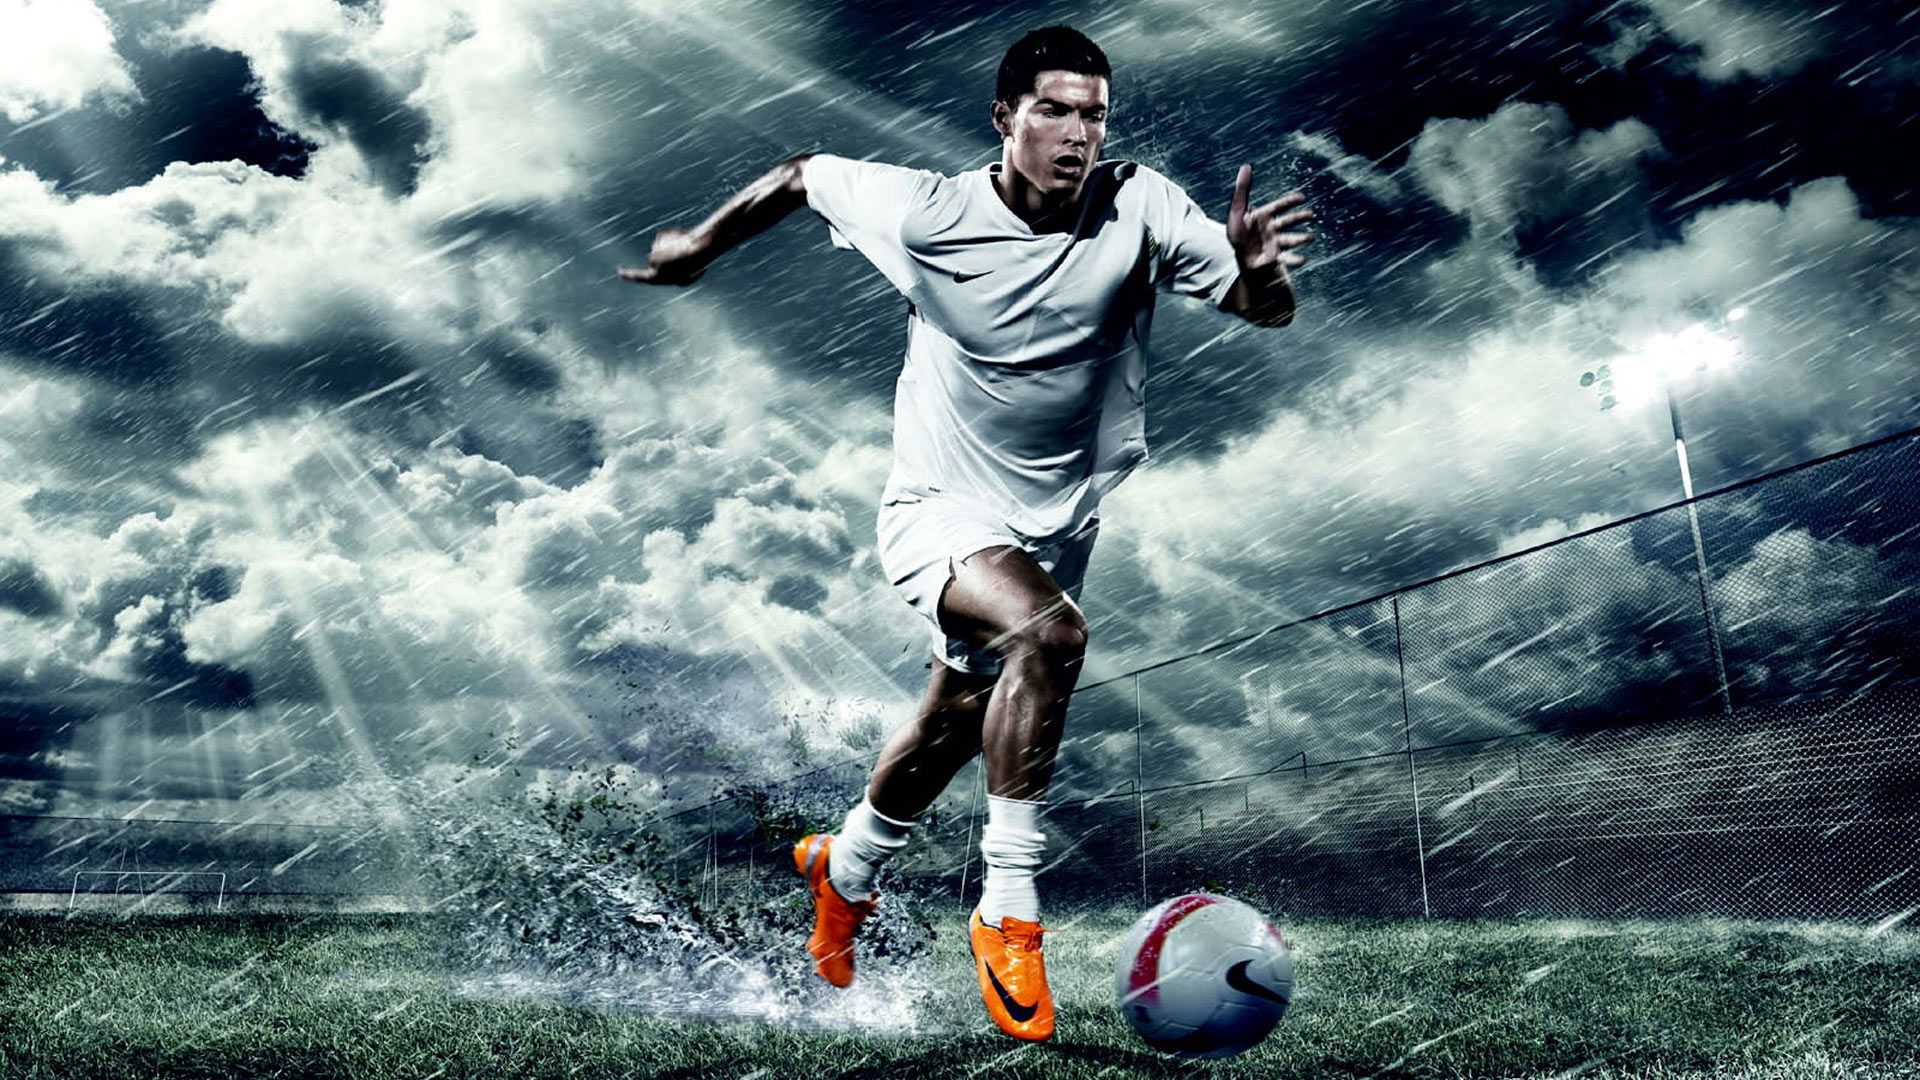 CR7 Cristiano Ronaldo HD Wallpaper Free Download Wallpaperxyz.com